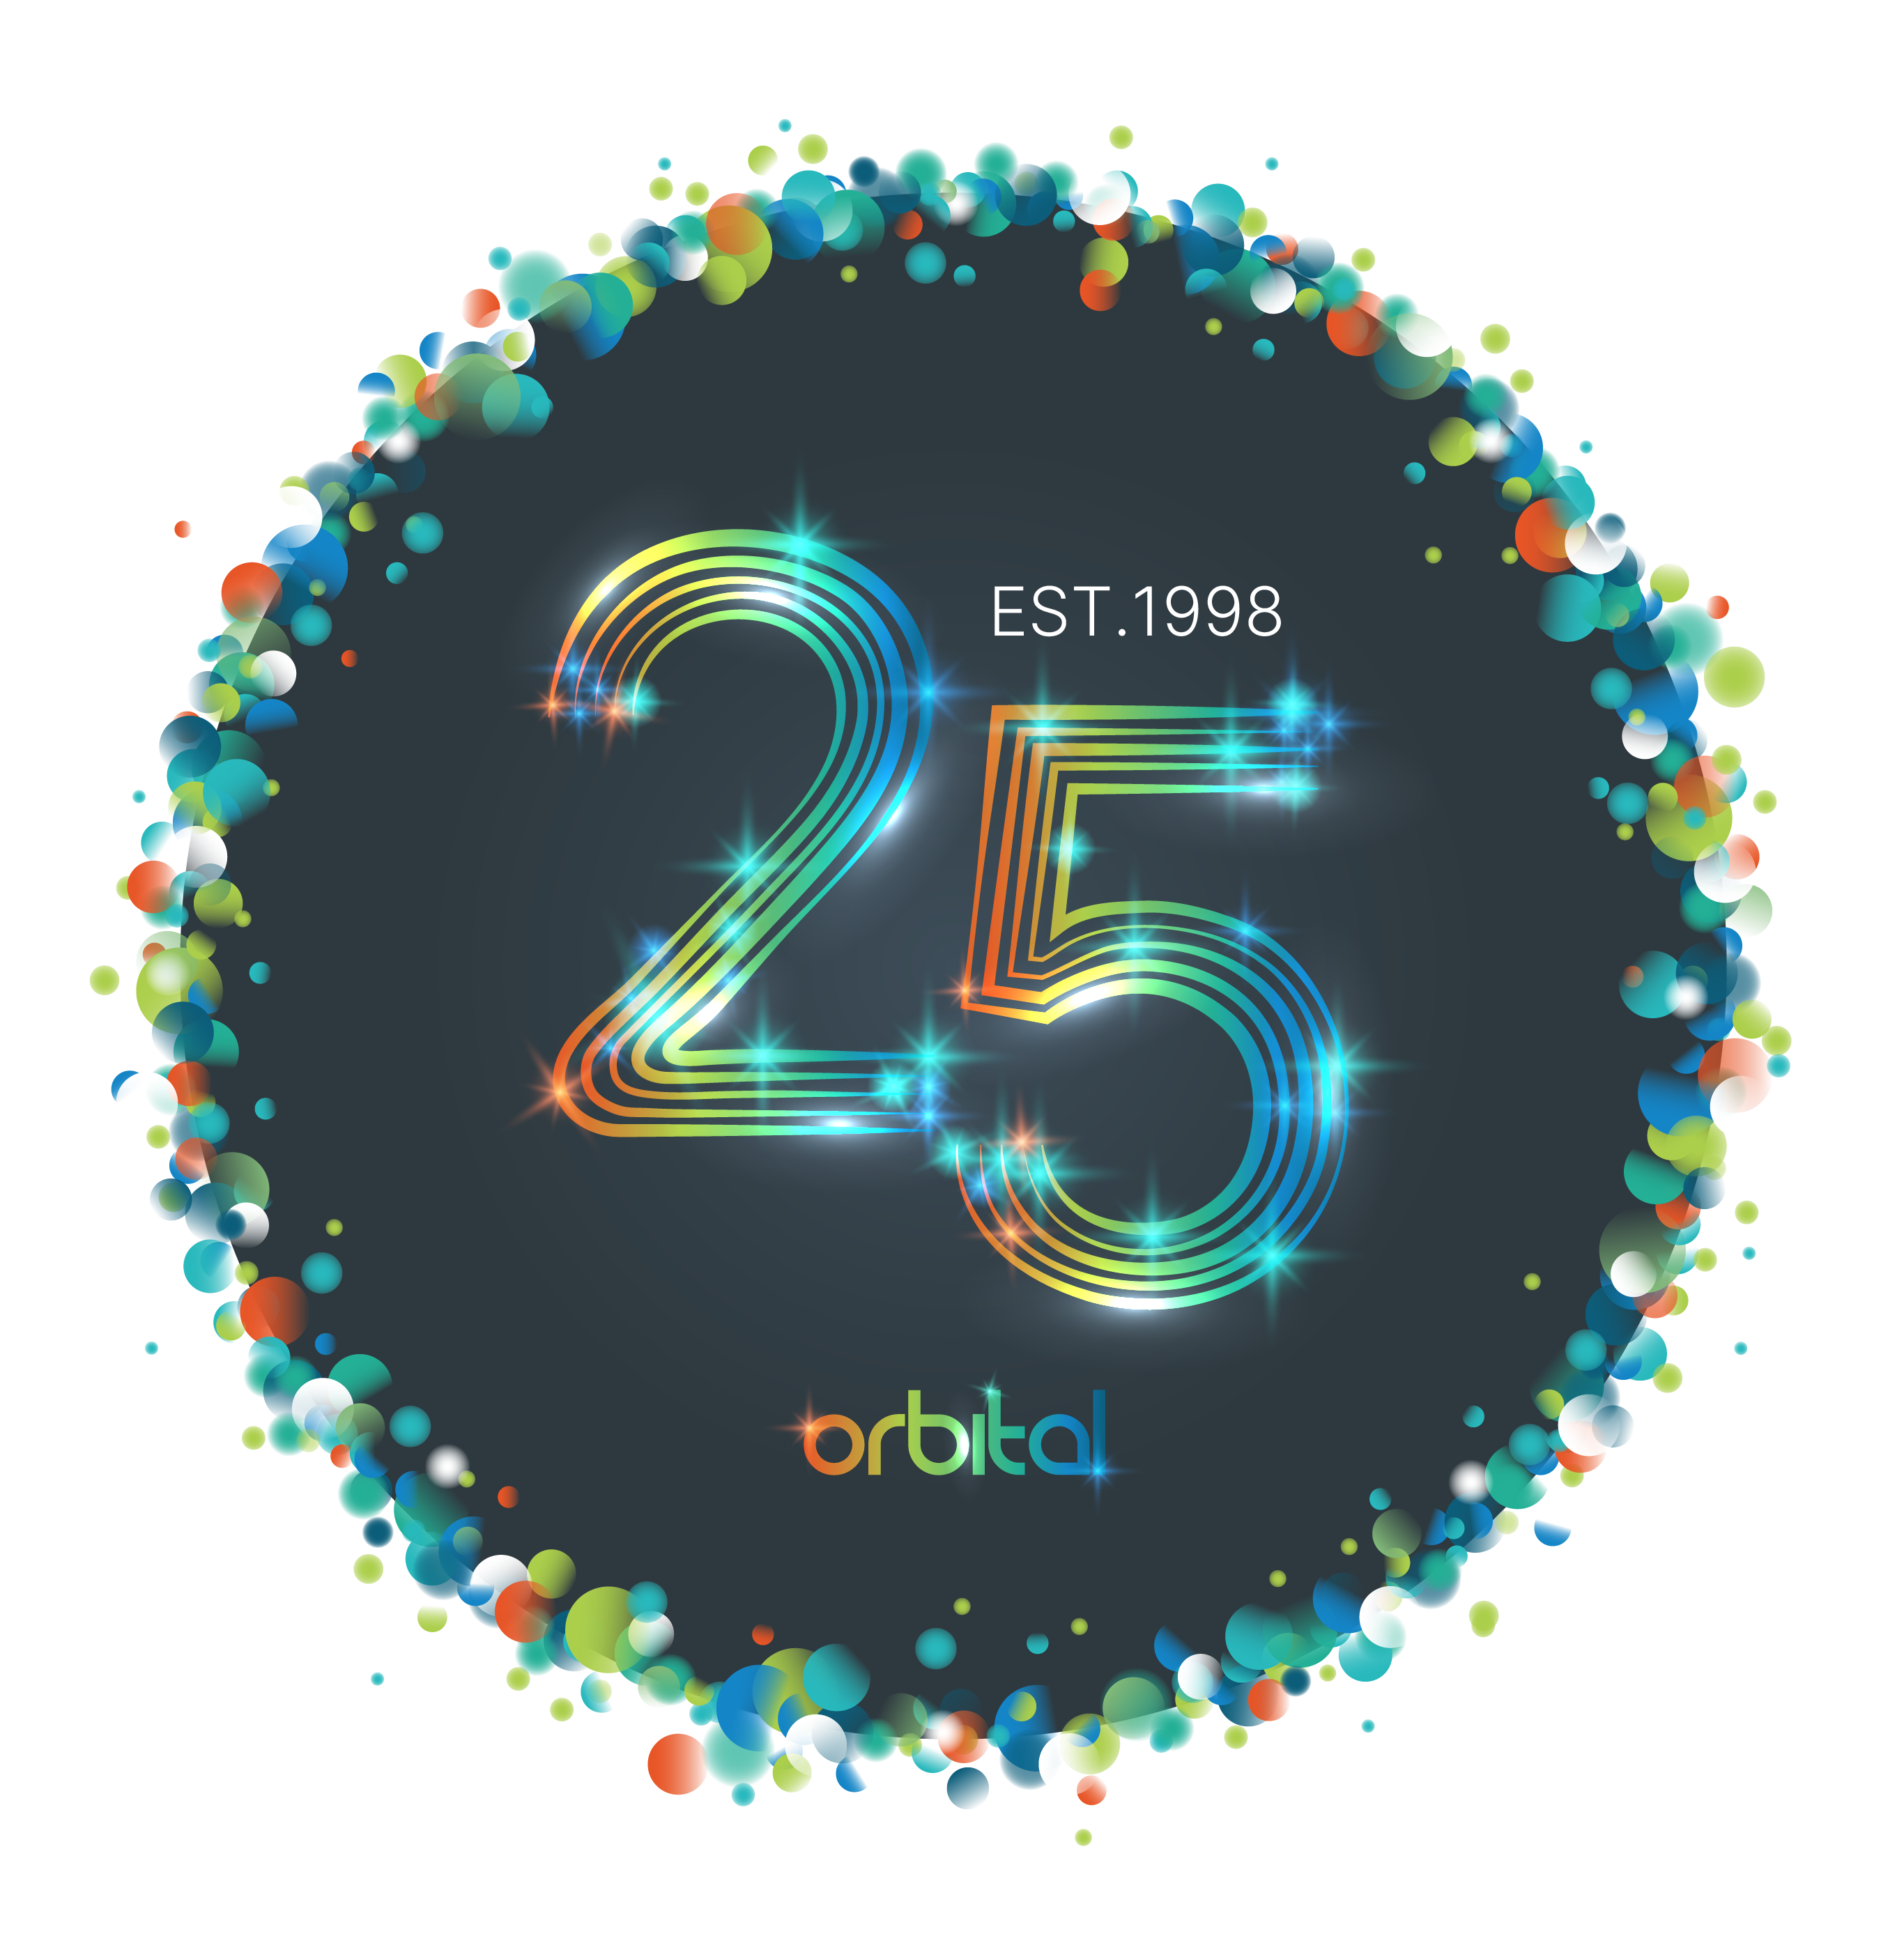 Orbital 25 years badge